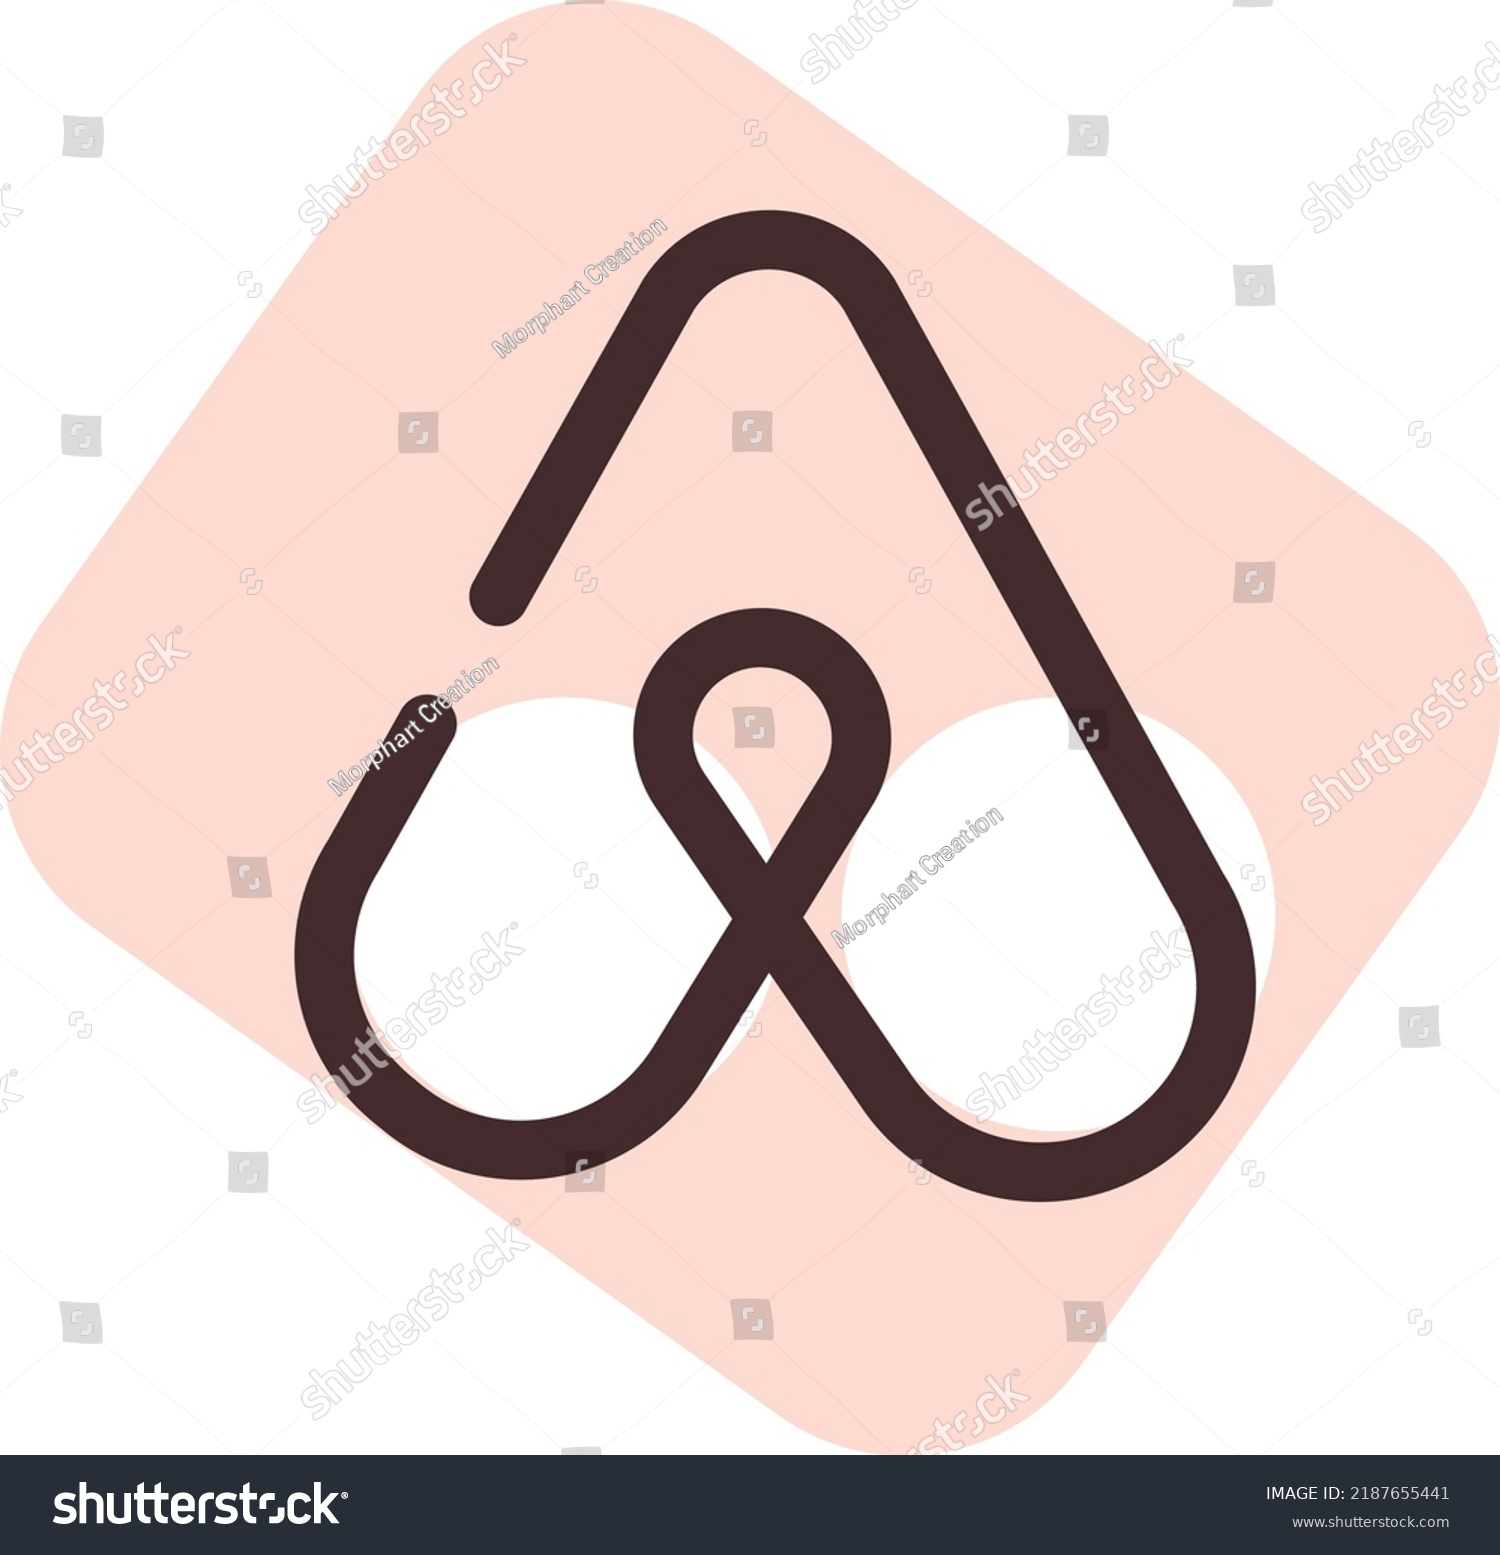 SVG of Social media airbnb, illustration, vector on a white background. svg